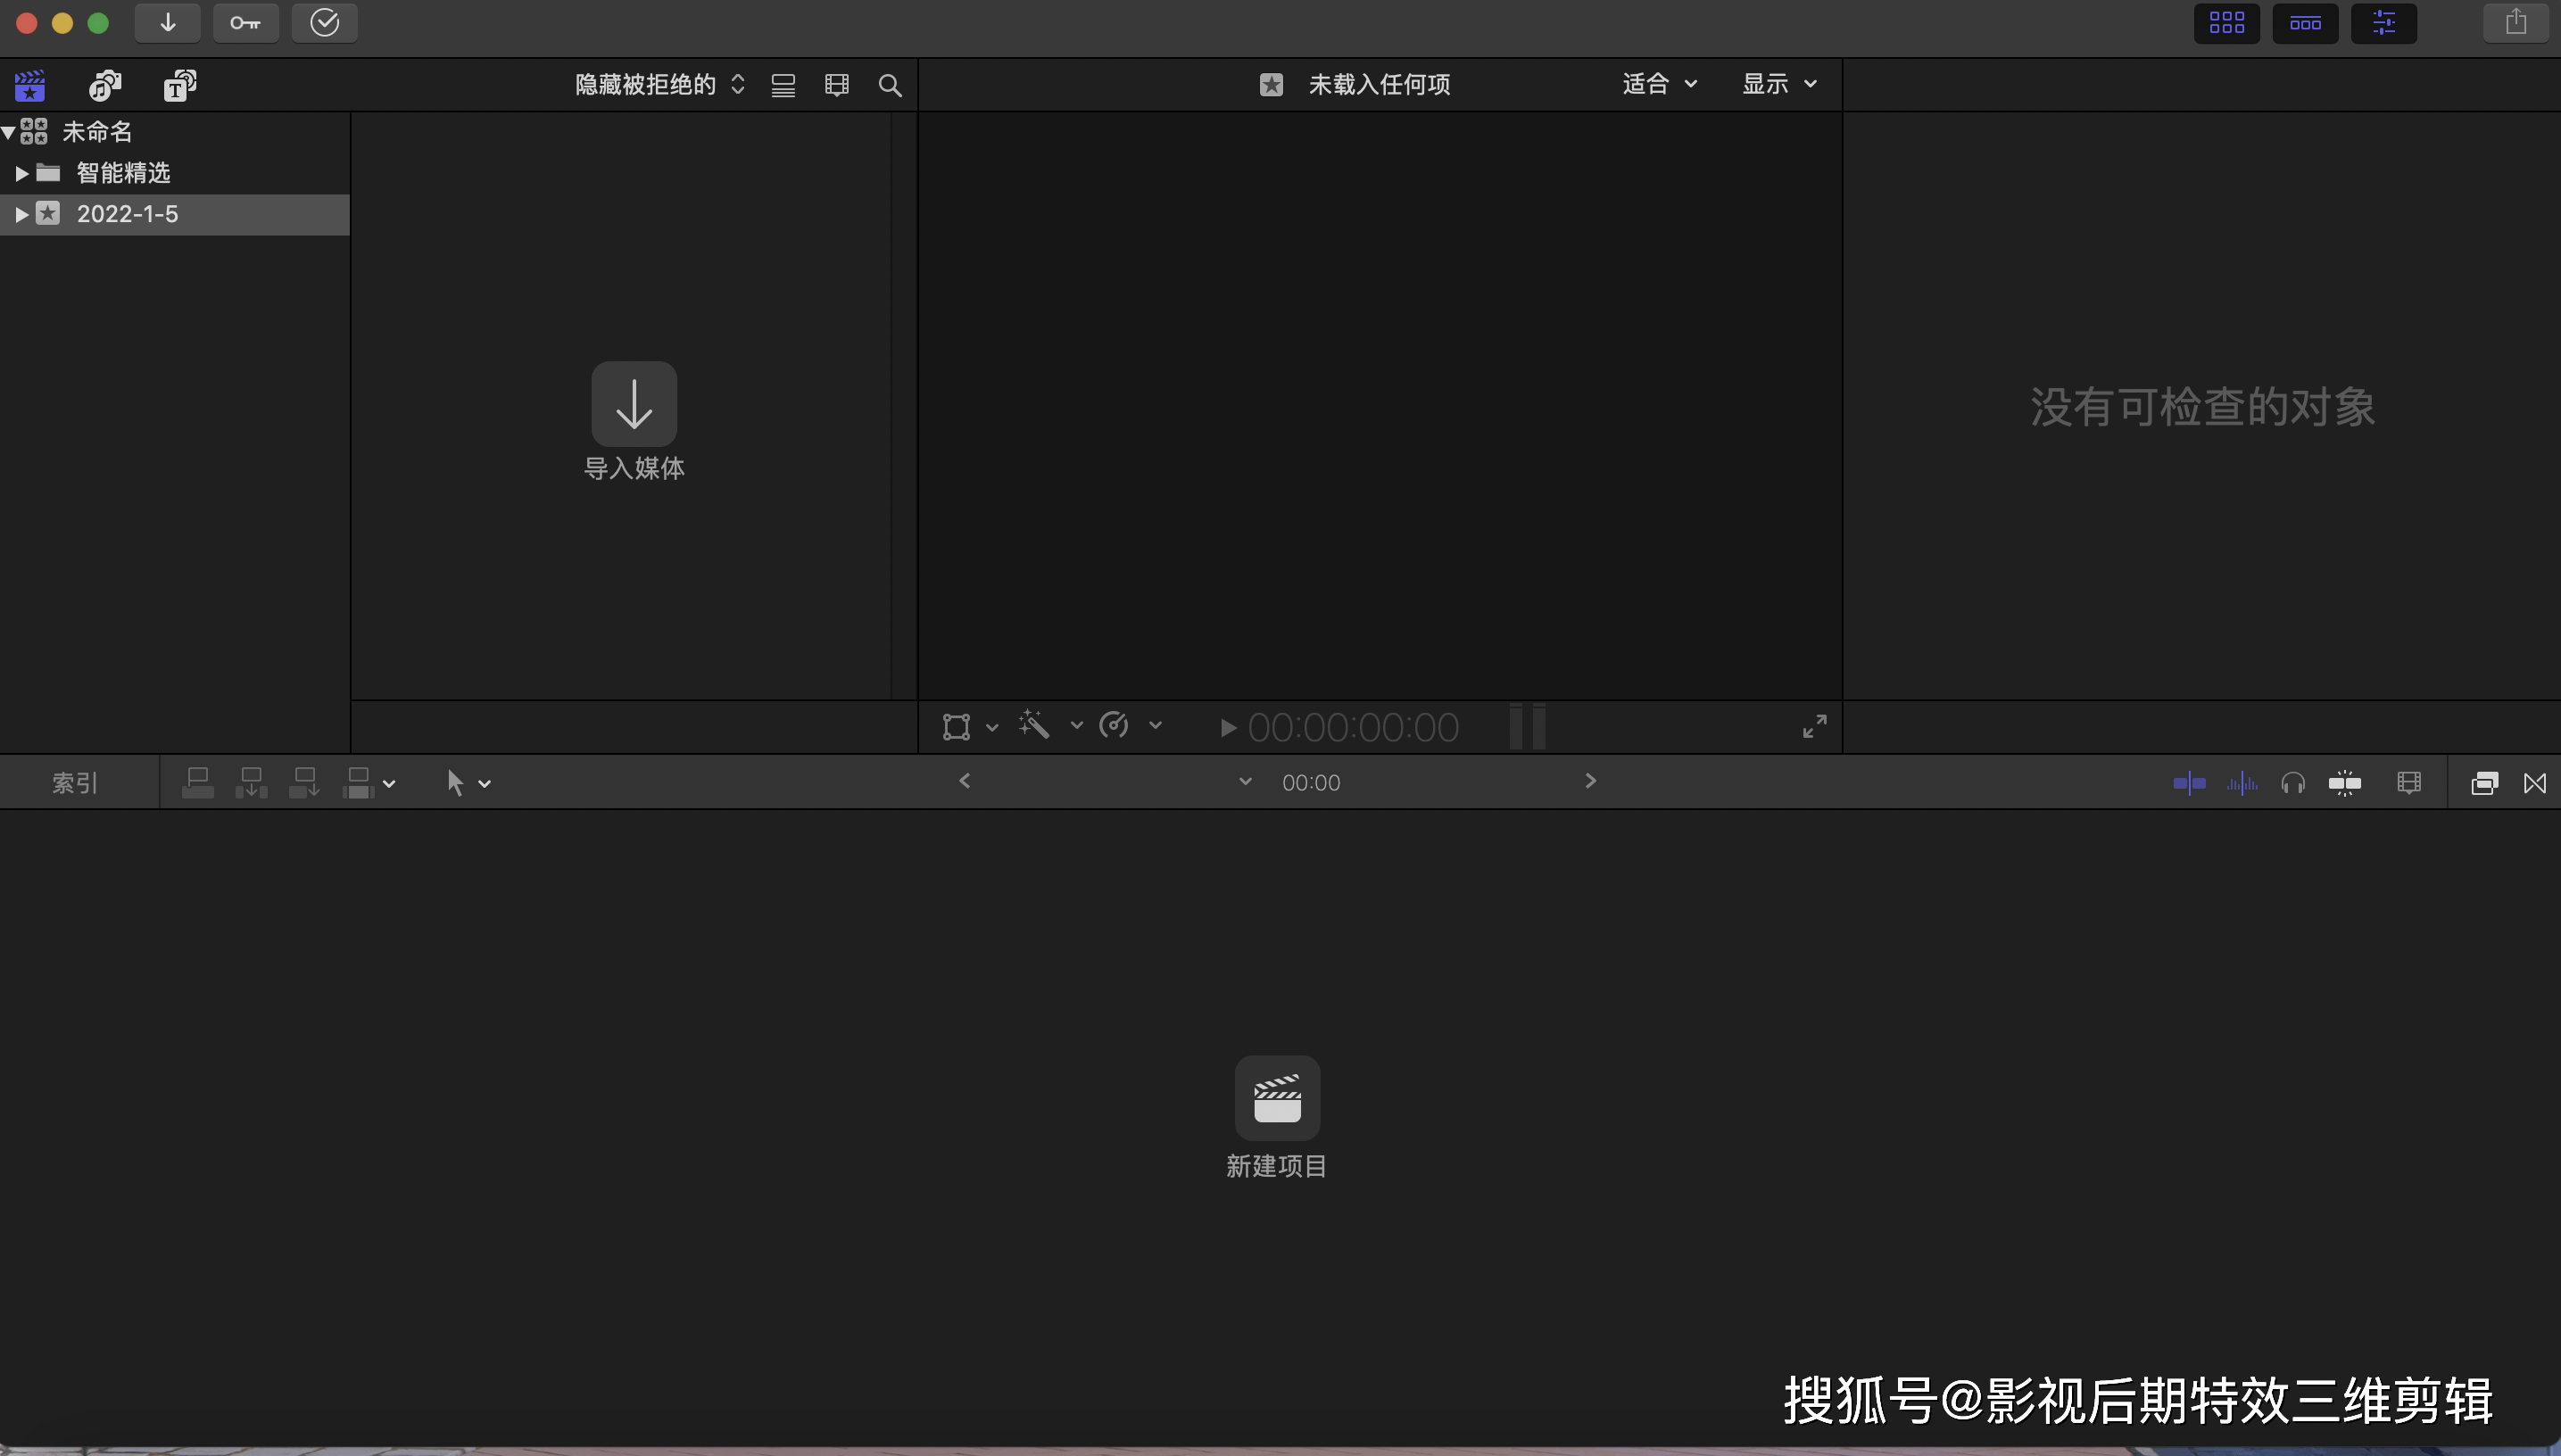 fcpx 10.6.1中文完整版下载 Final cut pro 最新版专业视频剪辑软件